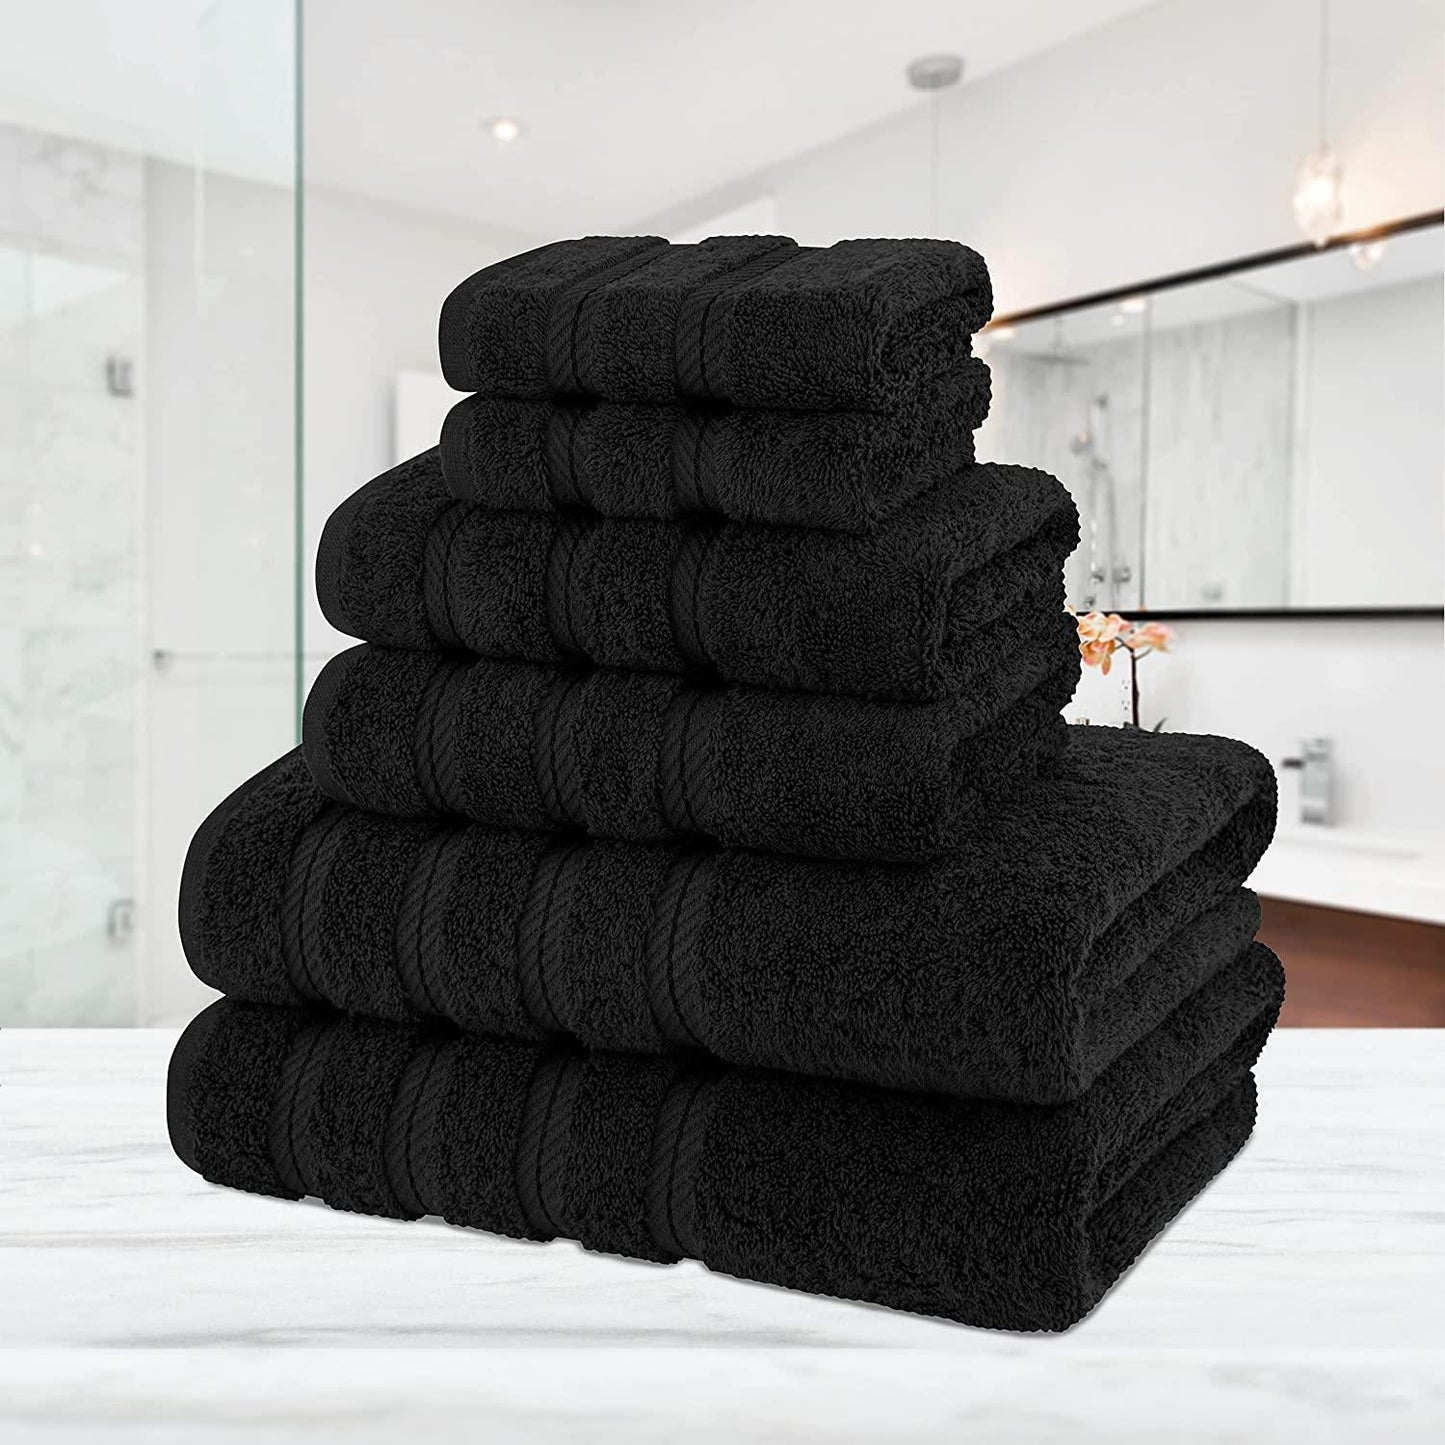 American Soft Linen, 6 Piece Towel Set, 2 Bath Towels 2 Hand Towels 2 Washcloths, Super Soft and Absorbent, 100% Turkish Cotton Towels for Bathroom and Kitchen Shower Towel, Black - Airbnb Ambassador